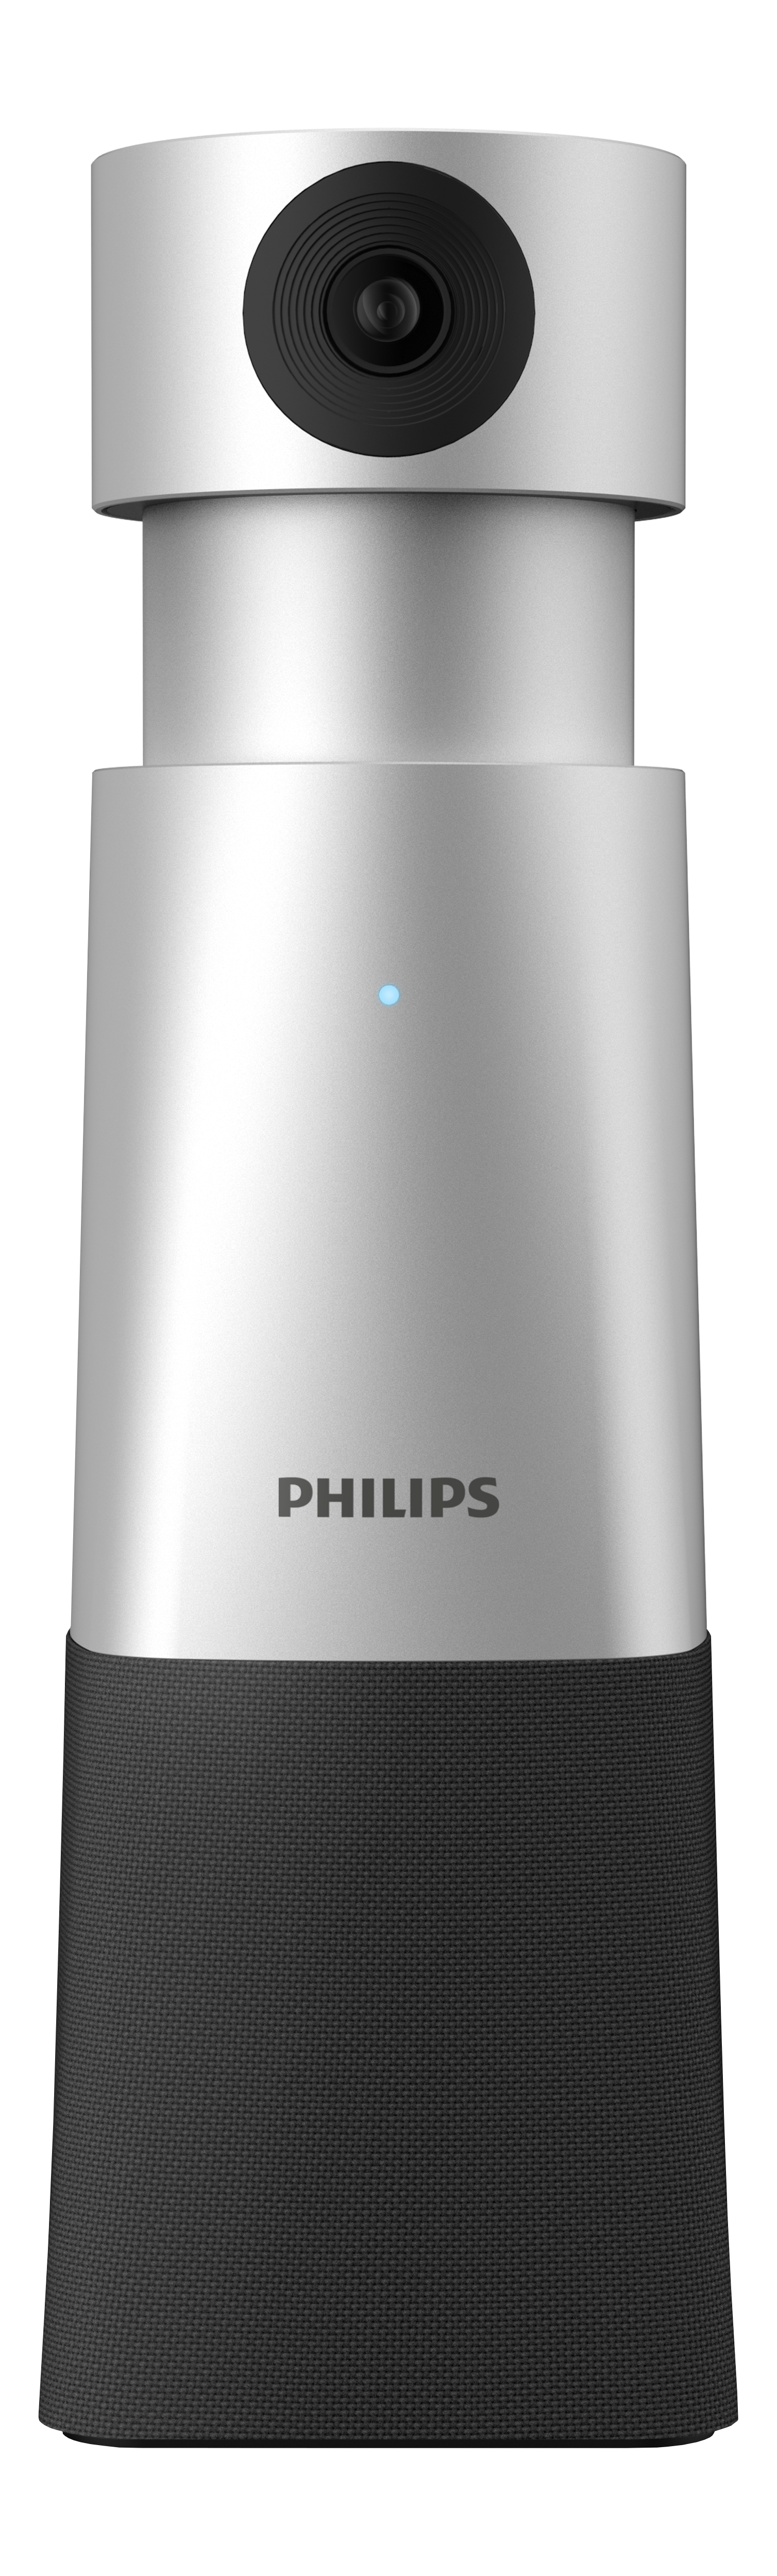 PHILIPS Smart Meeting PSE0550 - HD-Audio und -Videokonferenz System (Silber/Dunkelgrau)